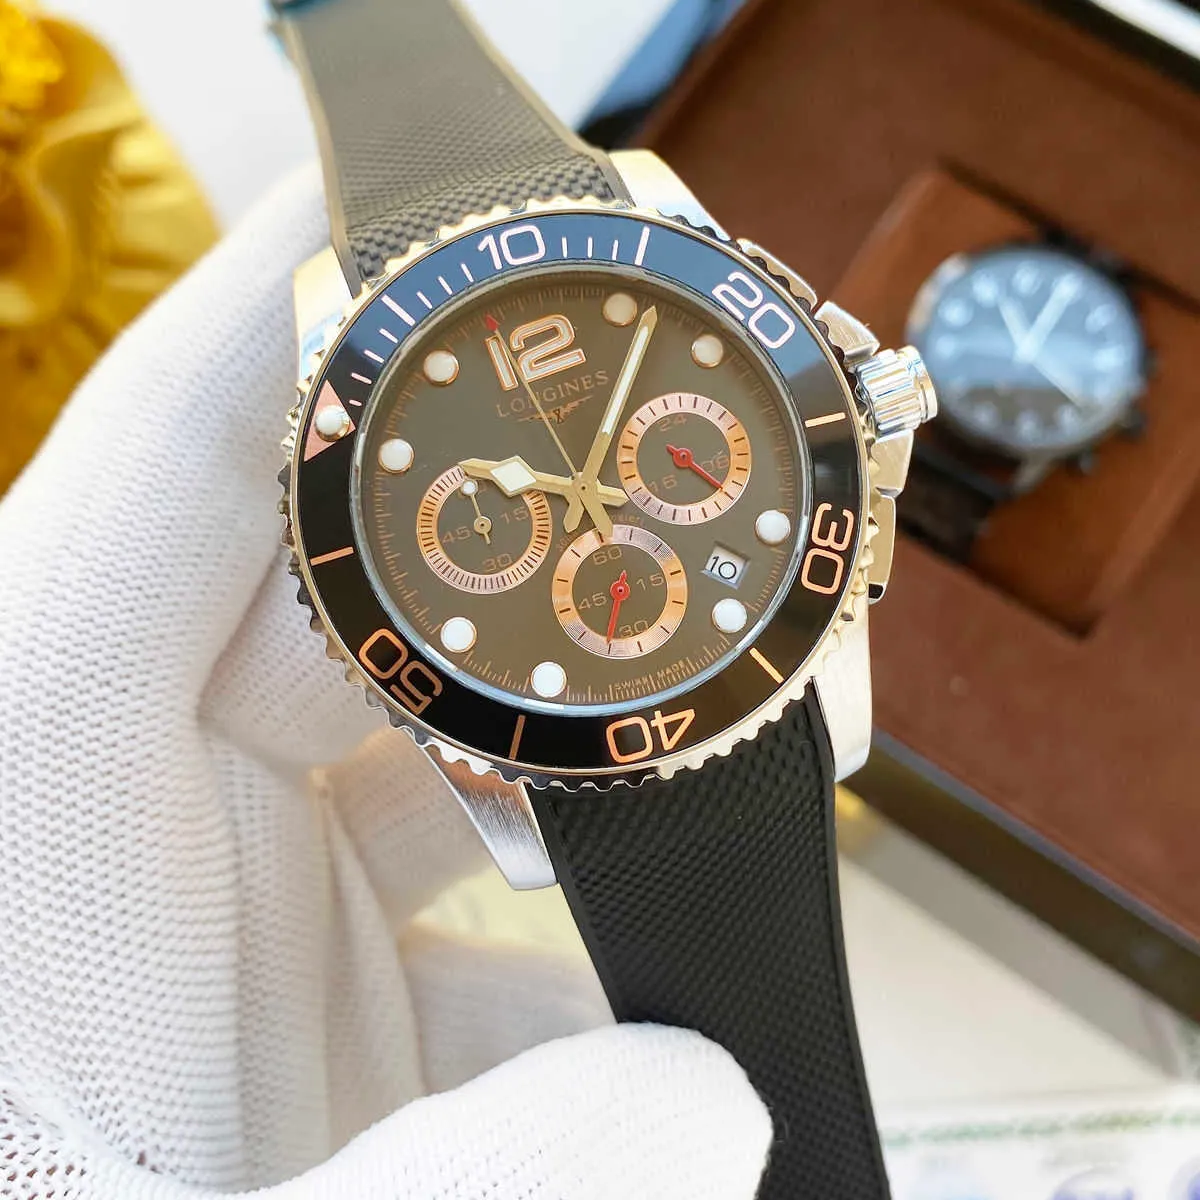 Three-eye six-pin full-function quartz tape wave brand watch men's business casual